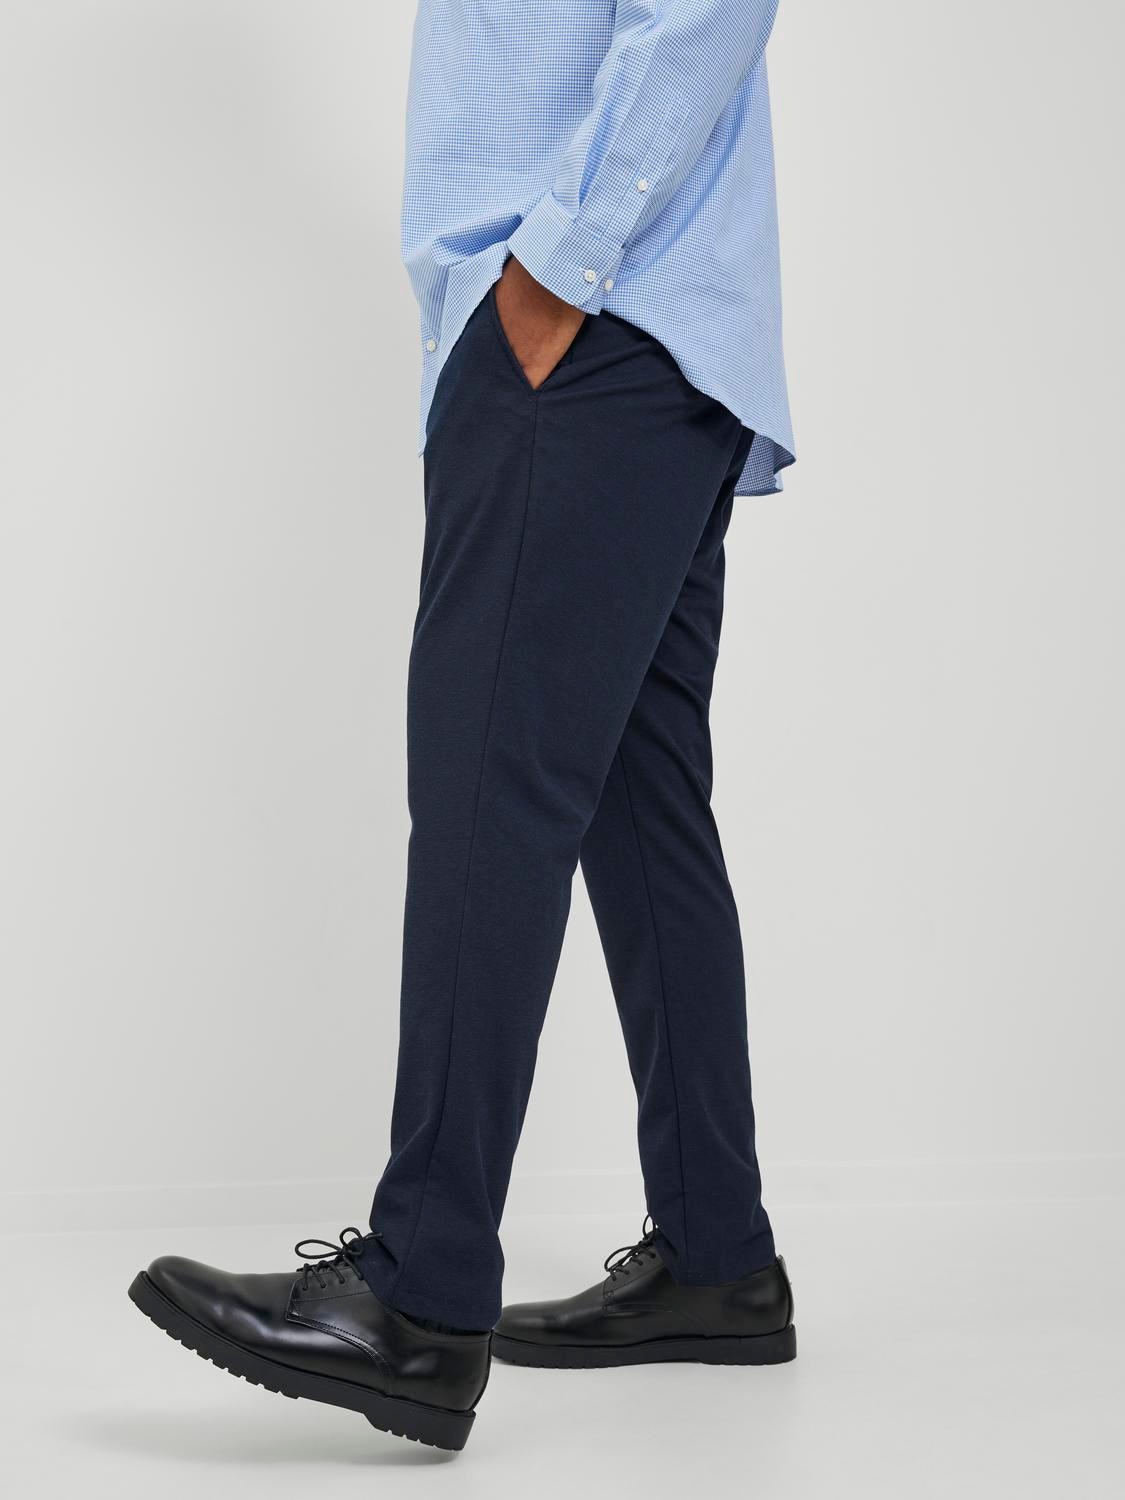 Jack & Jones Plus Size Calças Chino Slim Fit -Navy Blazer - 12250503